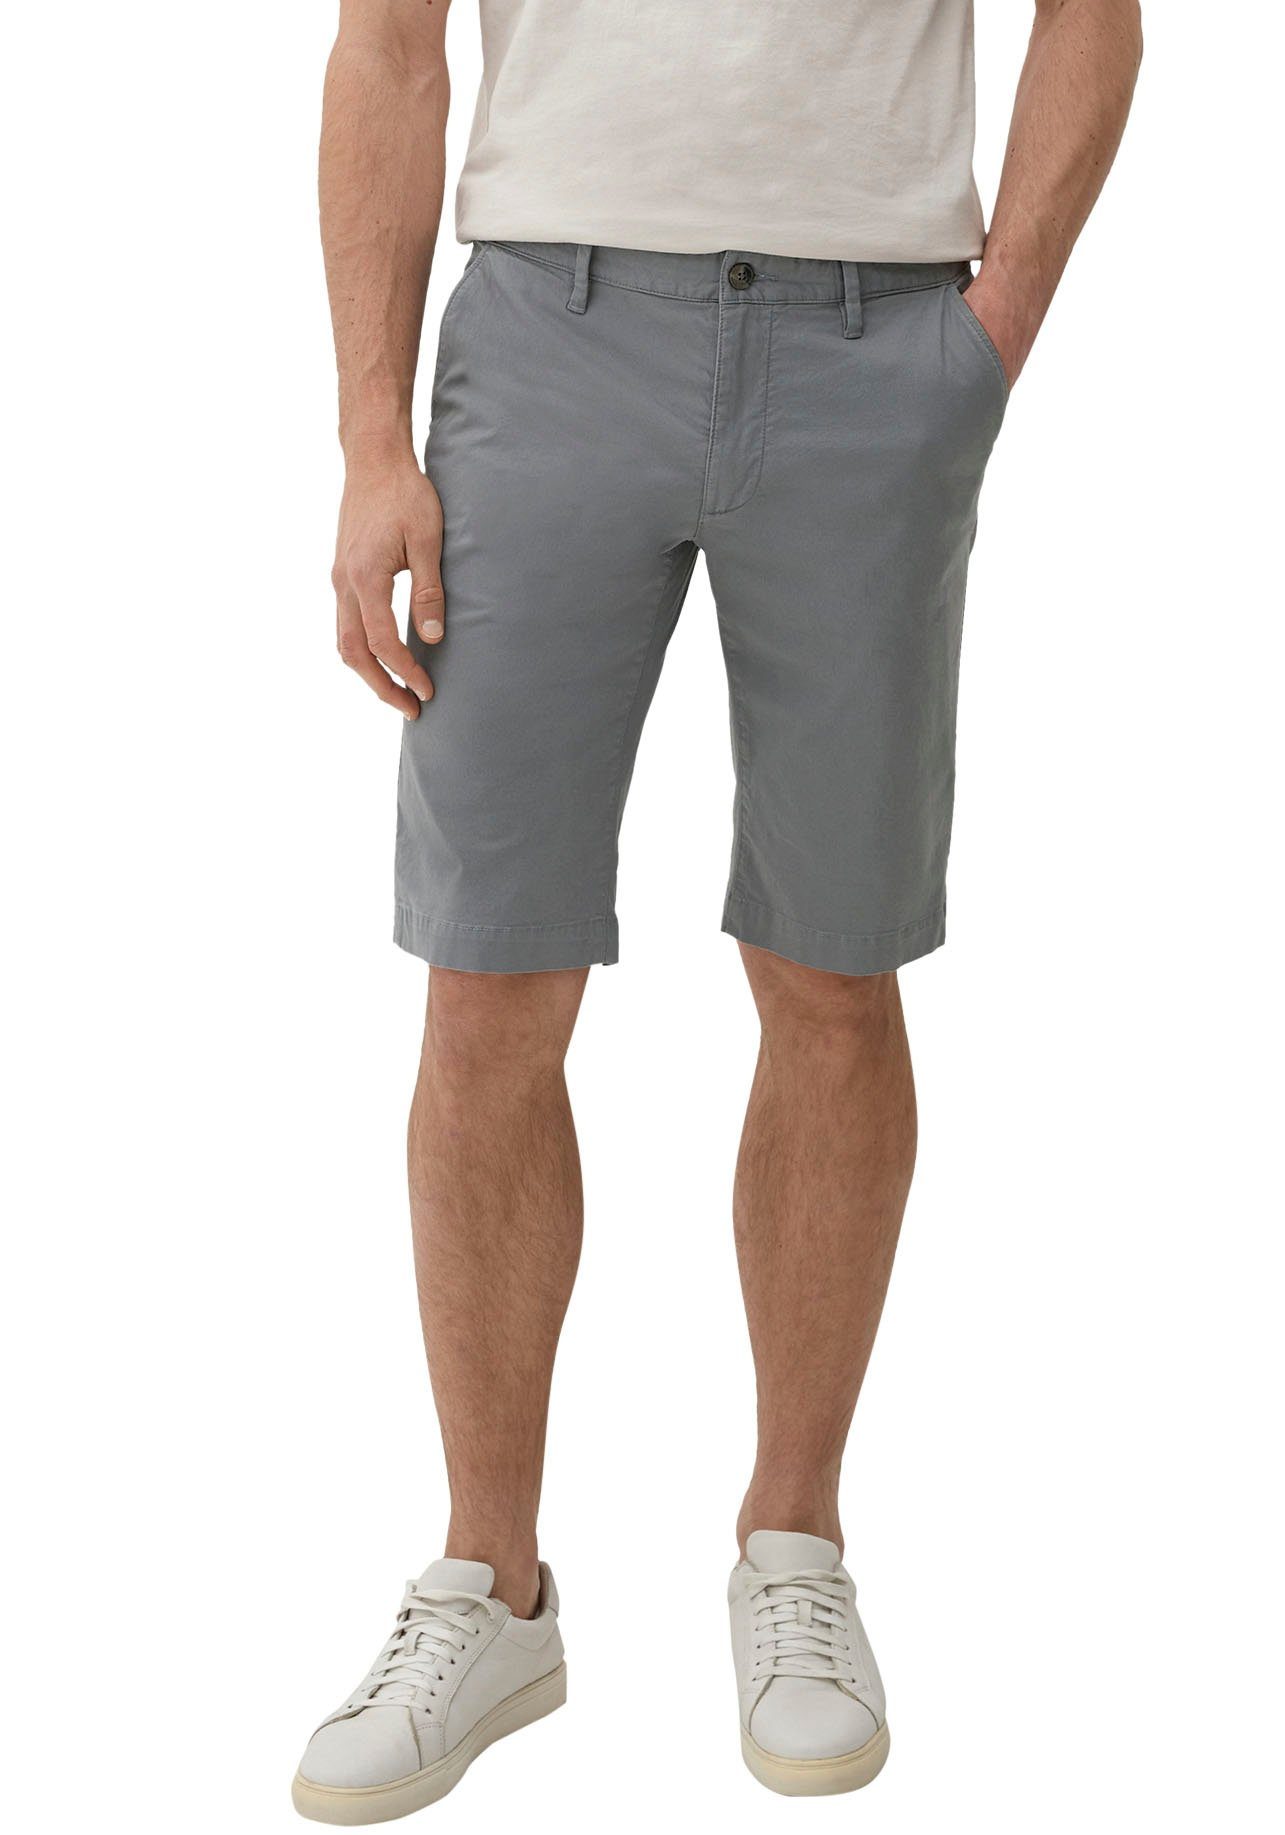 Shorts grey/black s.Oliver